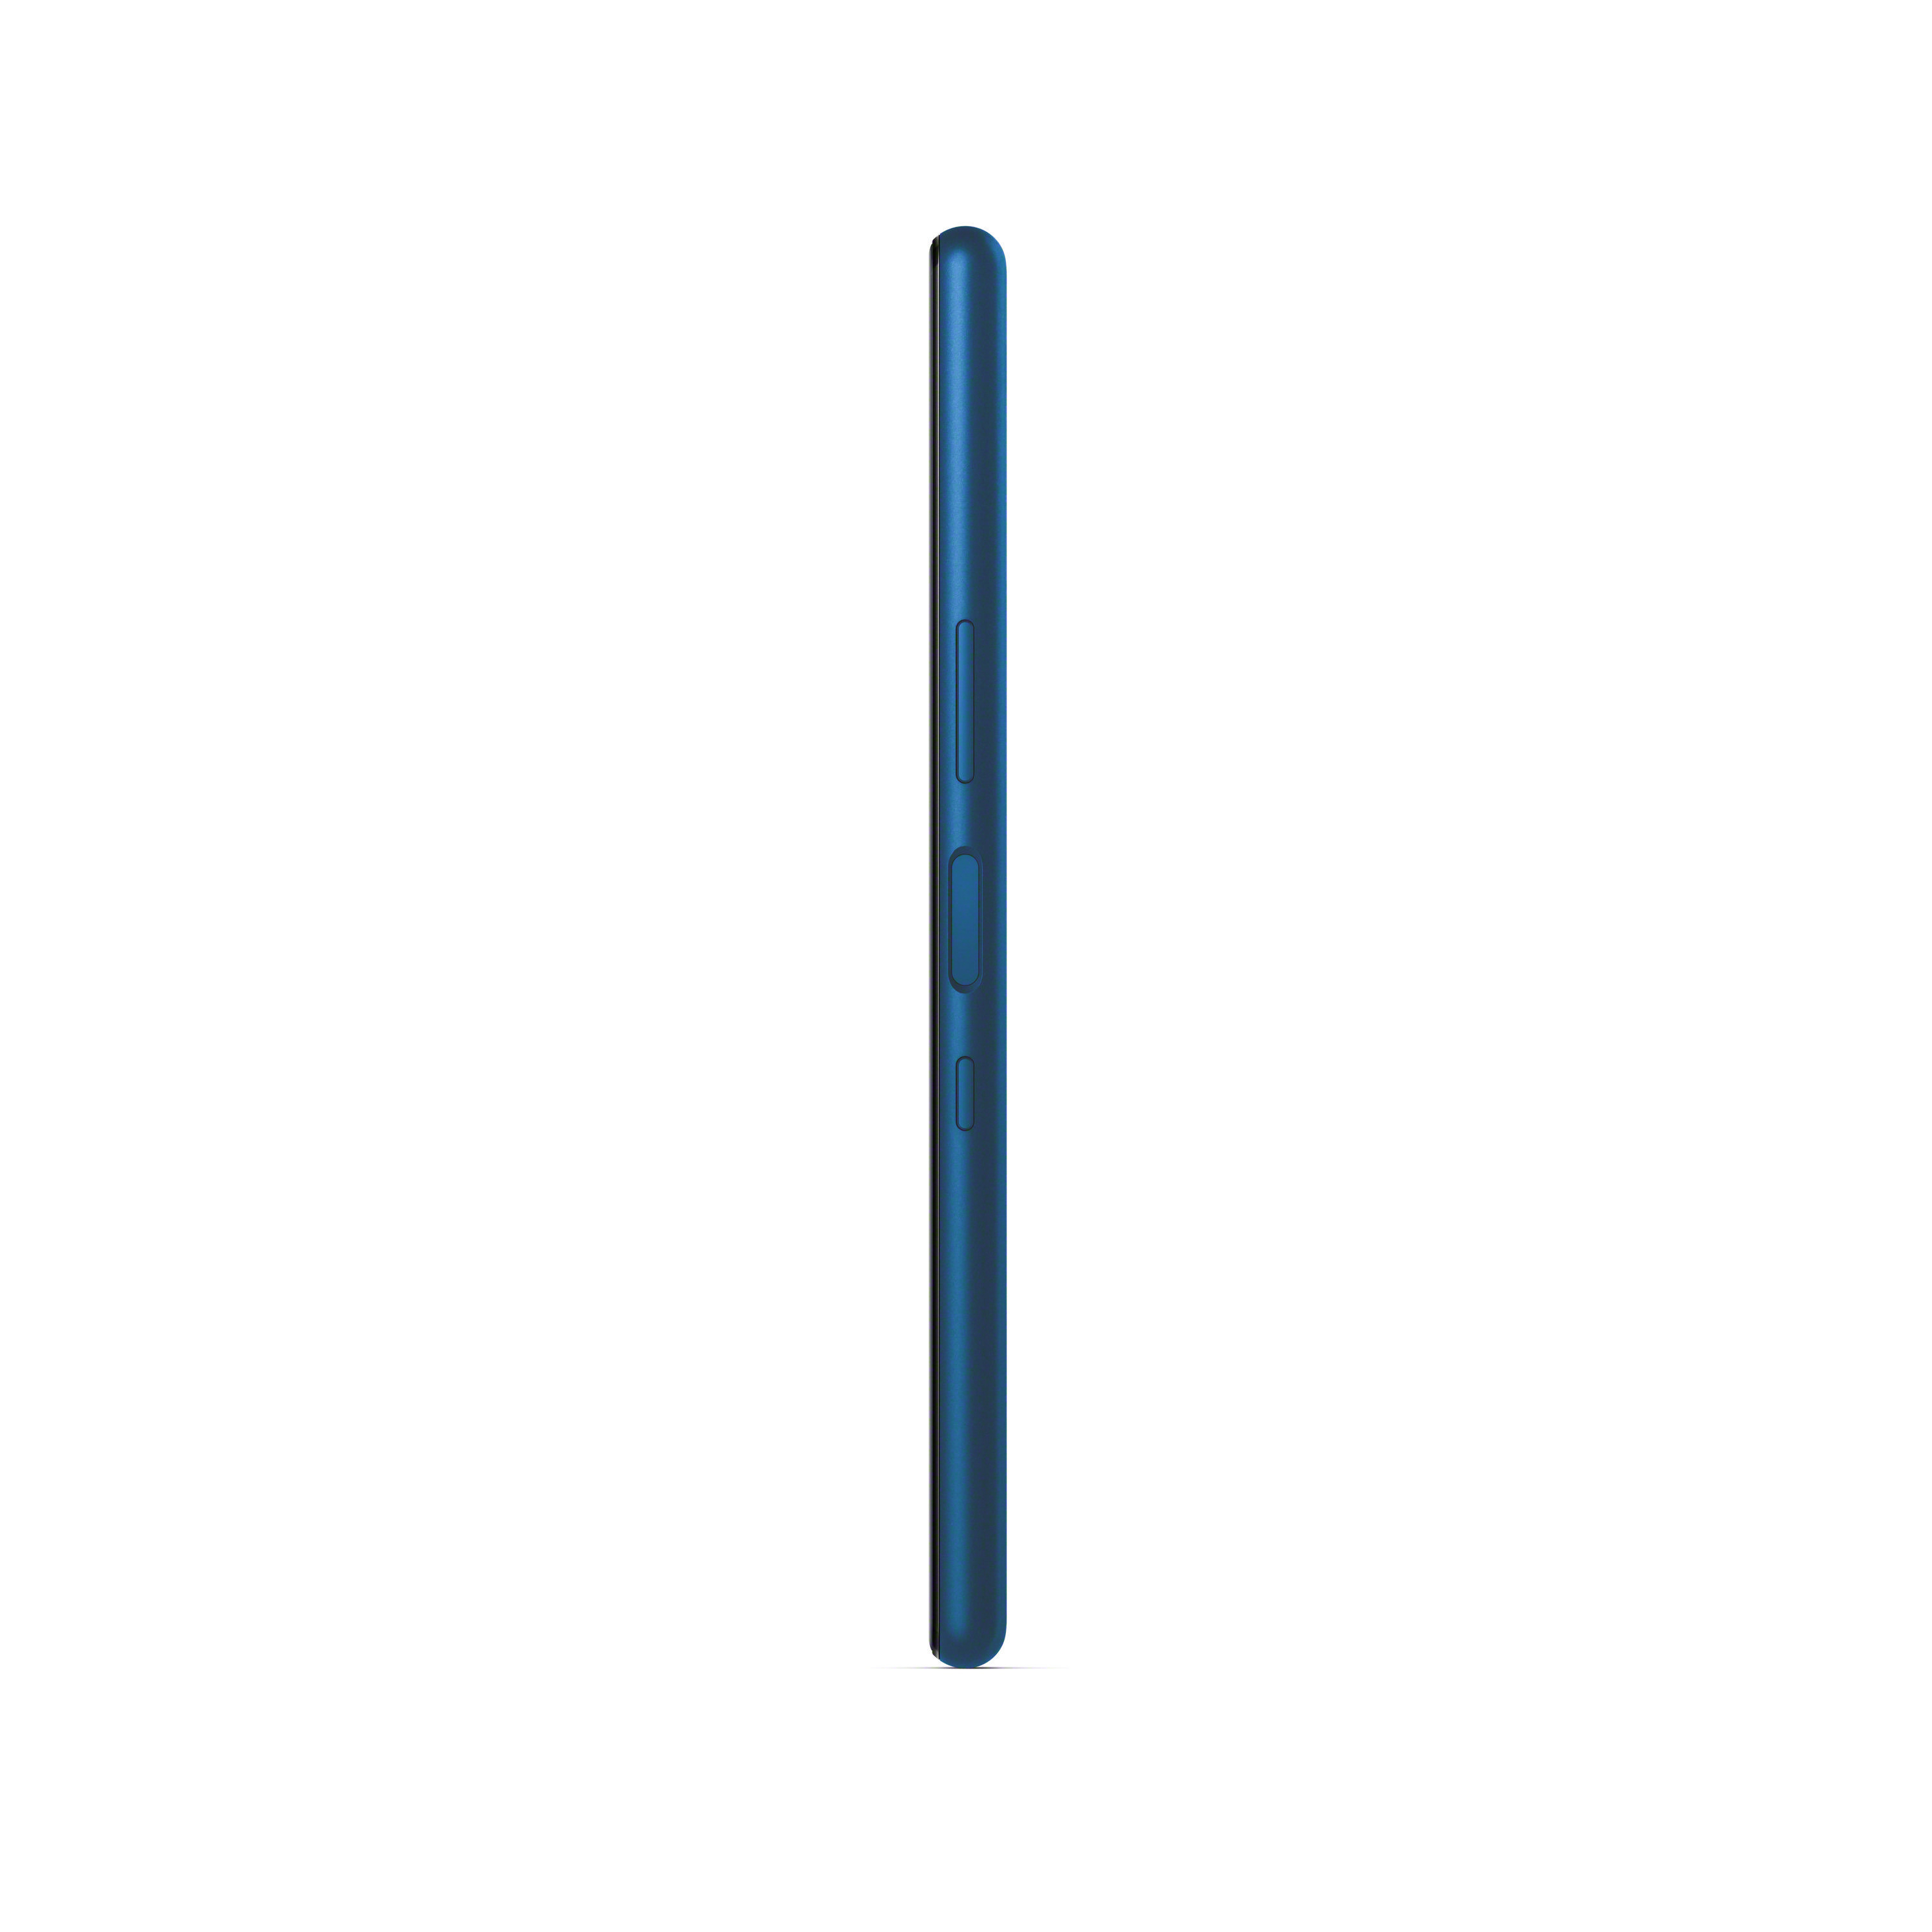 L4 SONY Xperia Display 21:9 Dual SIM 64 GB Blau